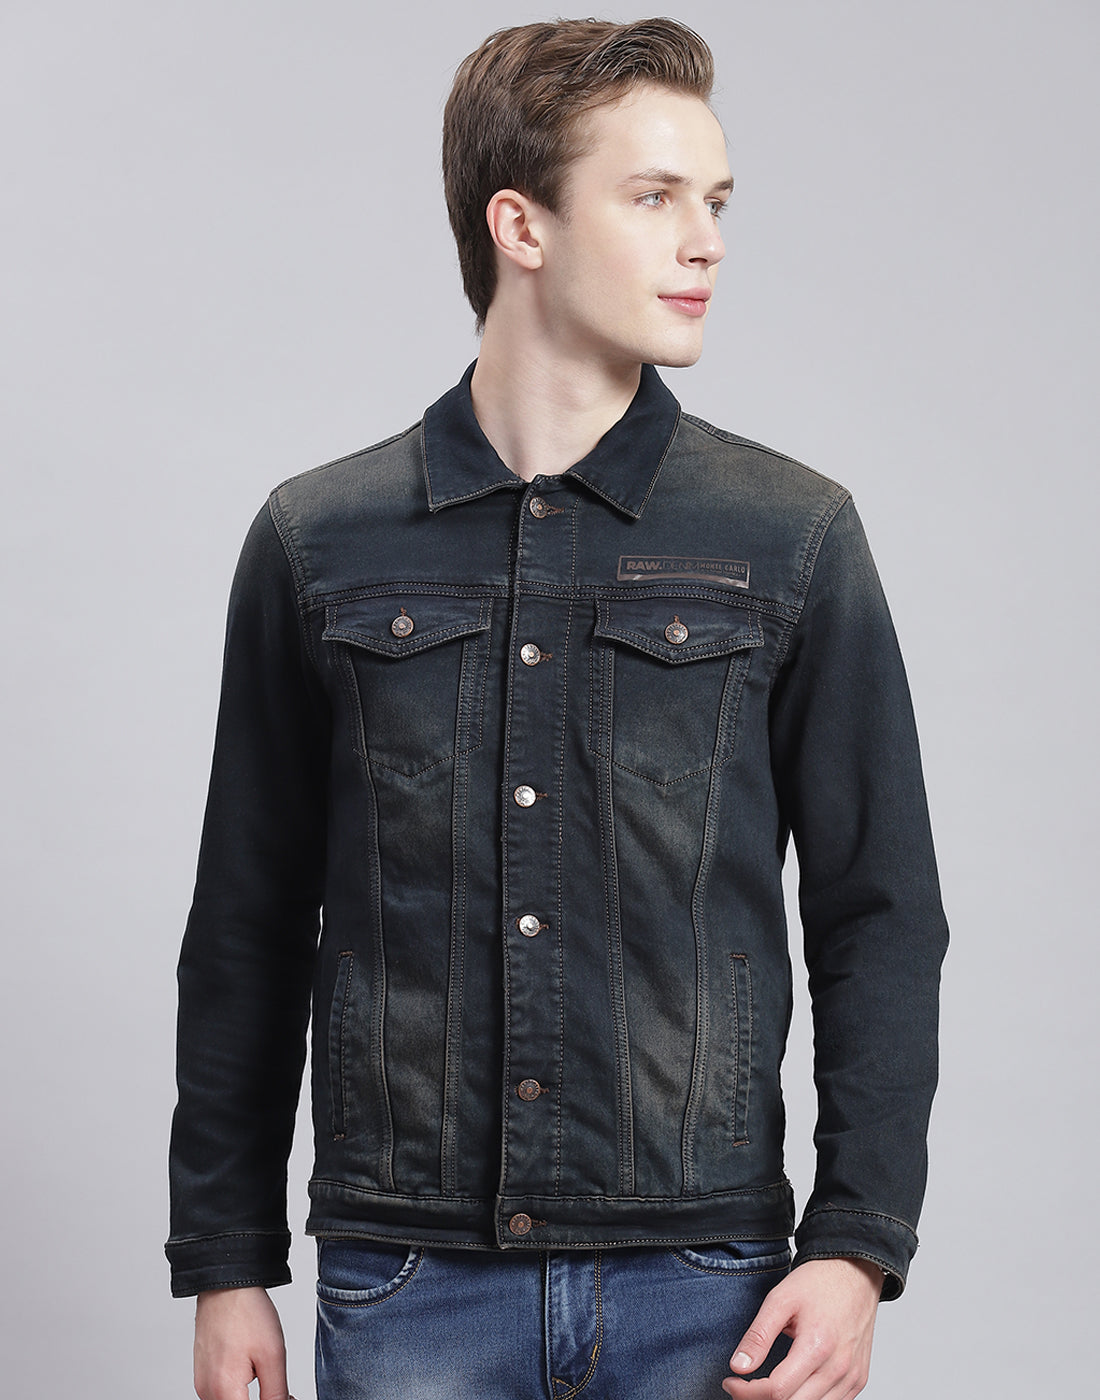 Calvin Klein Jeans Black Denim Jacket Mens SIze... - Depop